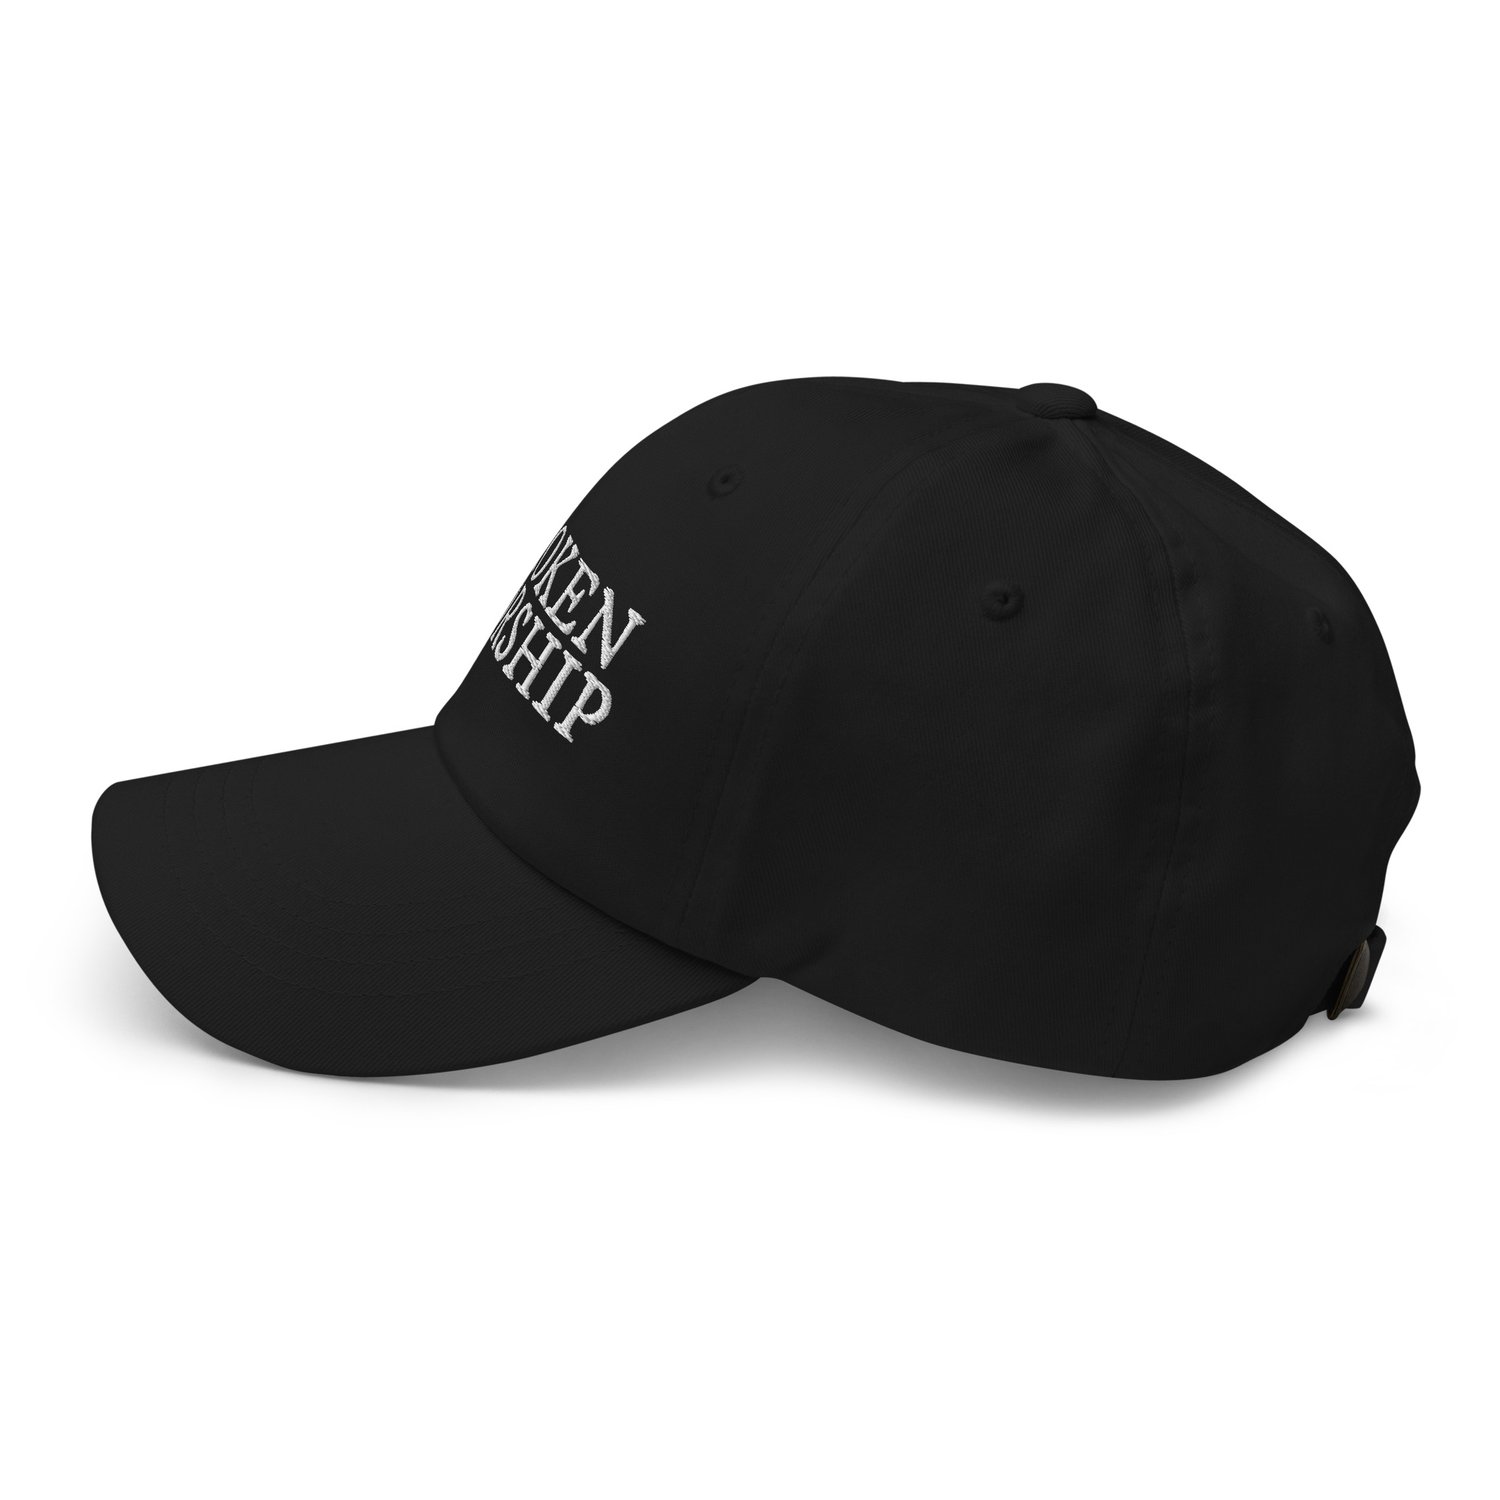 Image of Broken Worship Hat